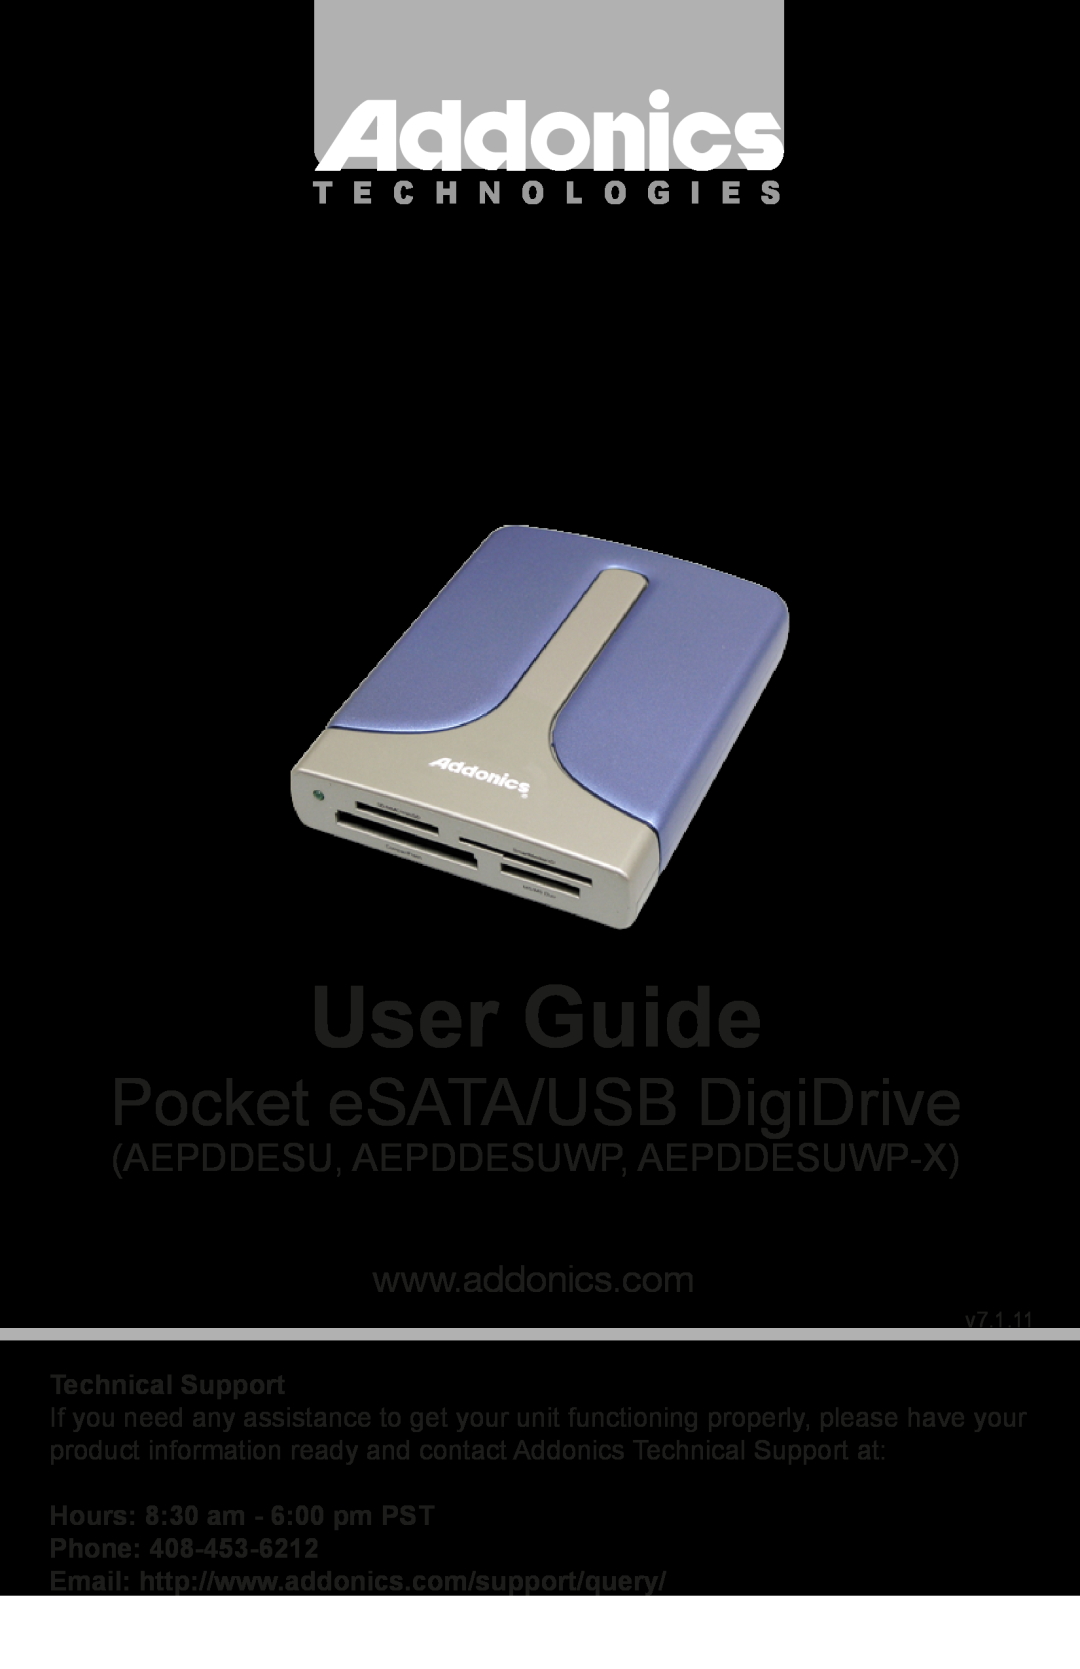 Addonics Technologies AEPDDESUWP manual User Guide, Pocket eSATA/USB DigiDrive, Aepddesu, Aepddesuwp, Aepddesuwp-X 